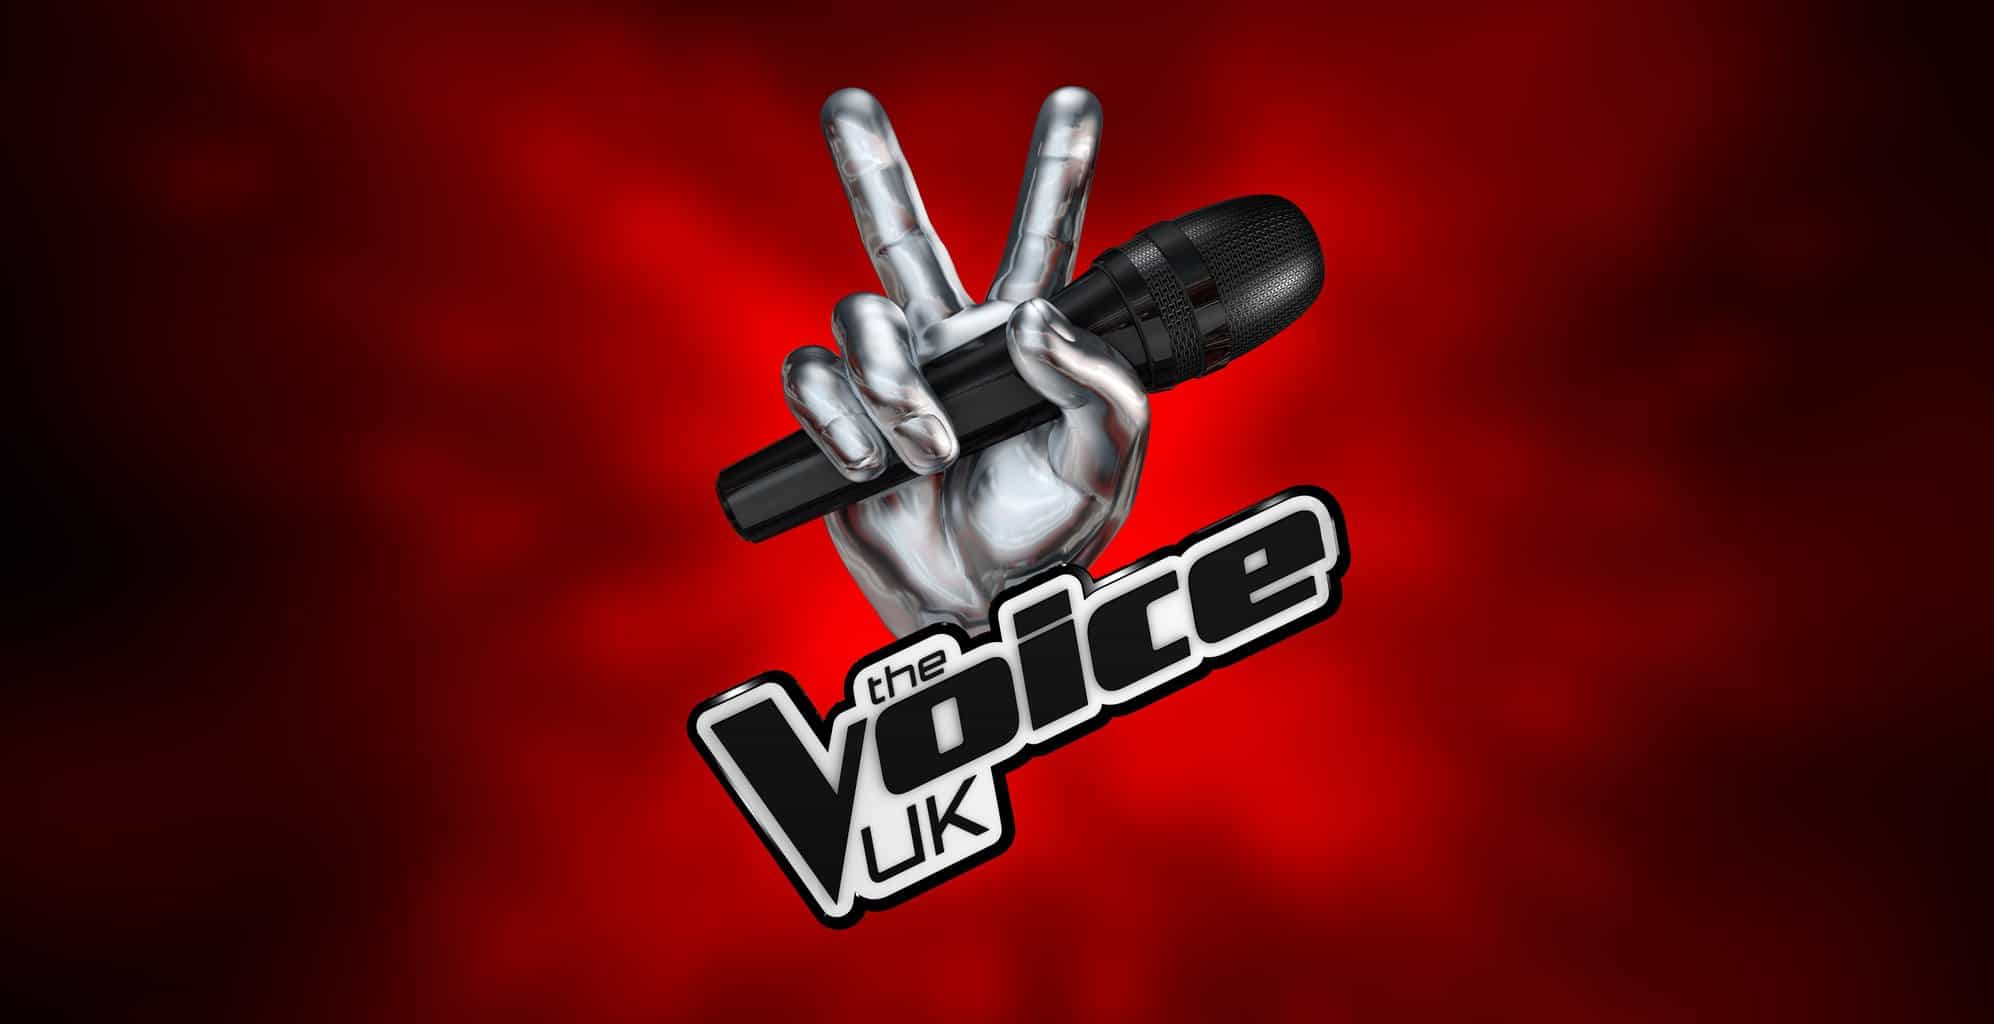 the-voice-uk-logo